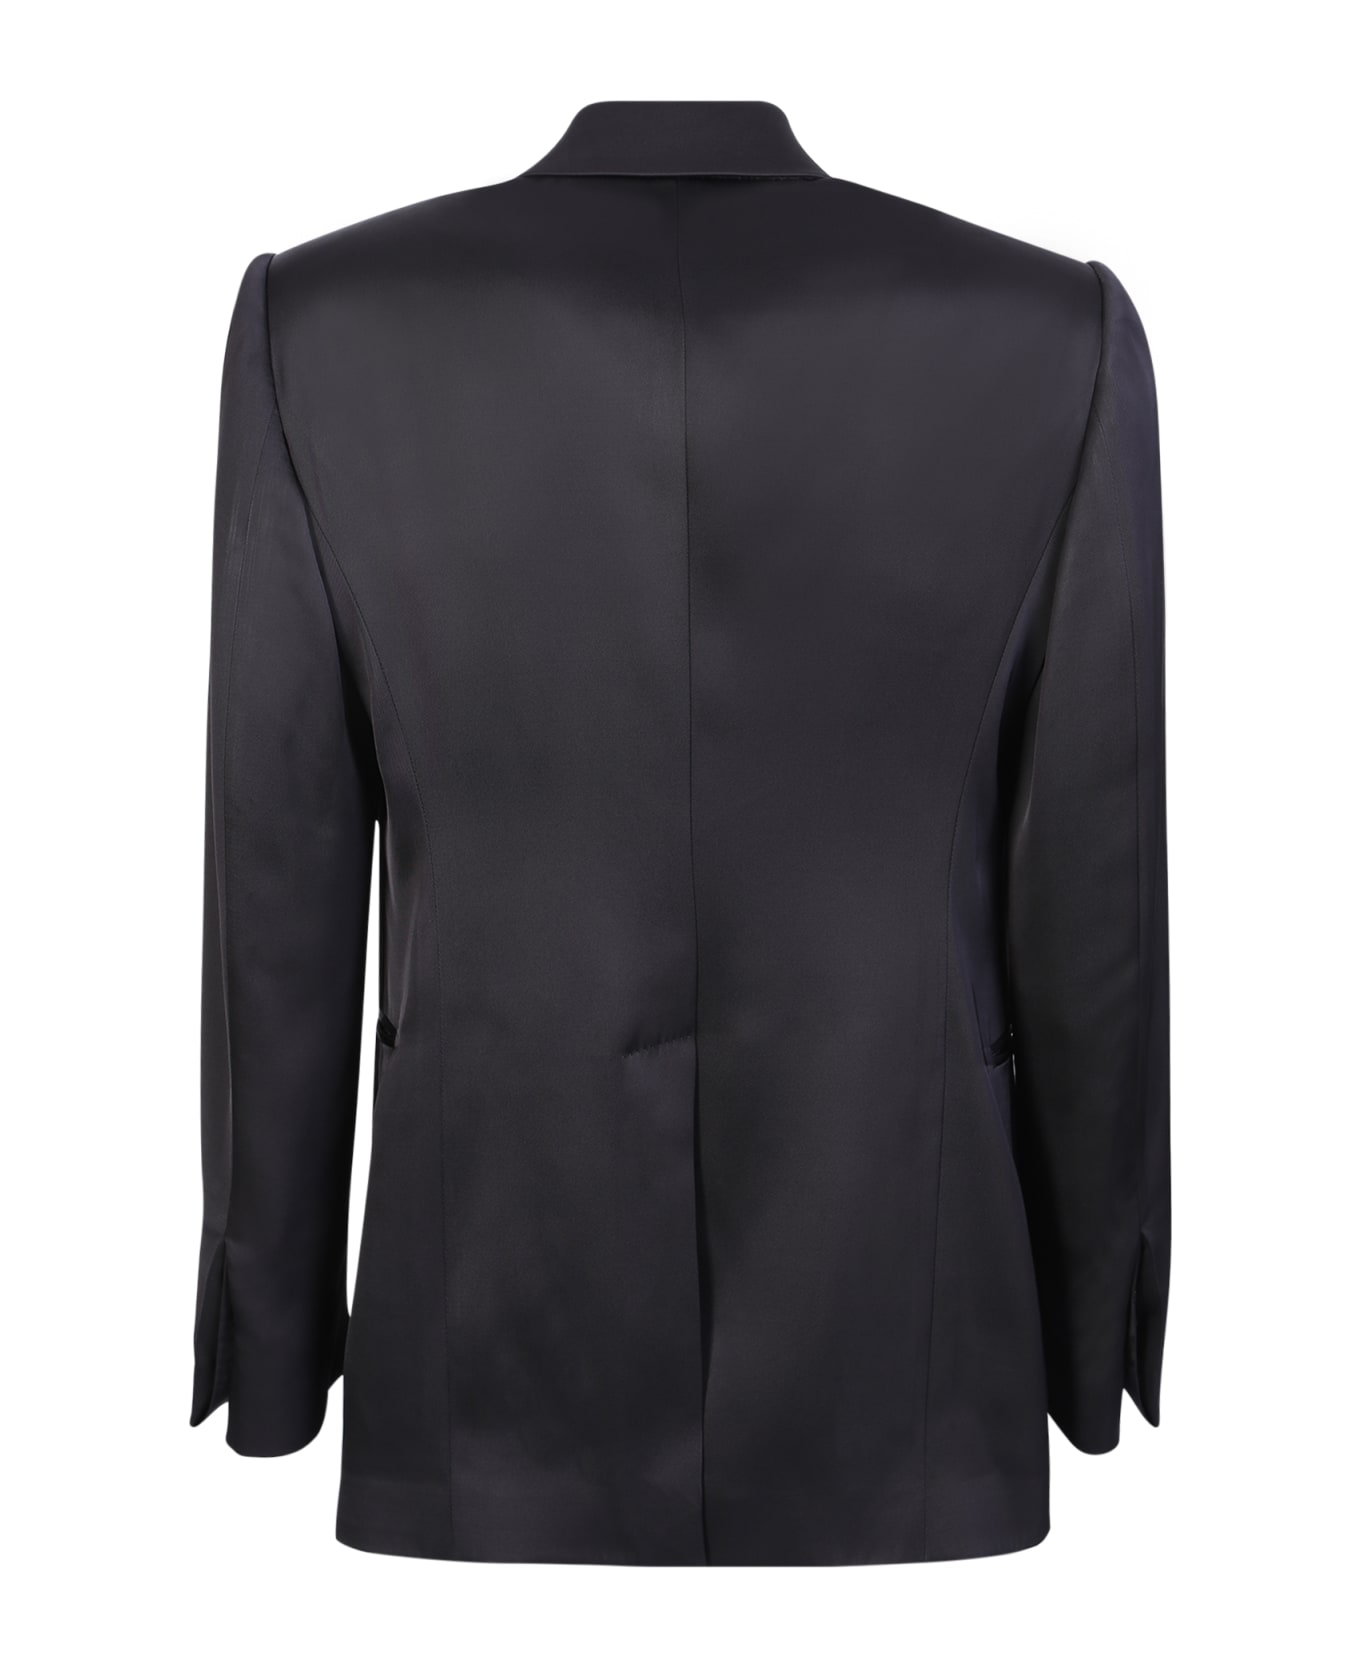 Alexander McQueen Wrapped Design Black Jacket - Black スーツ